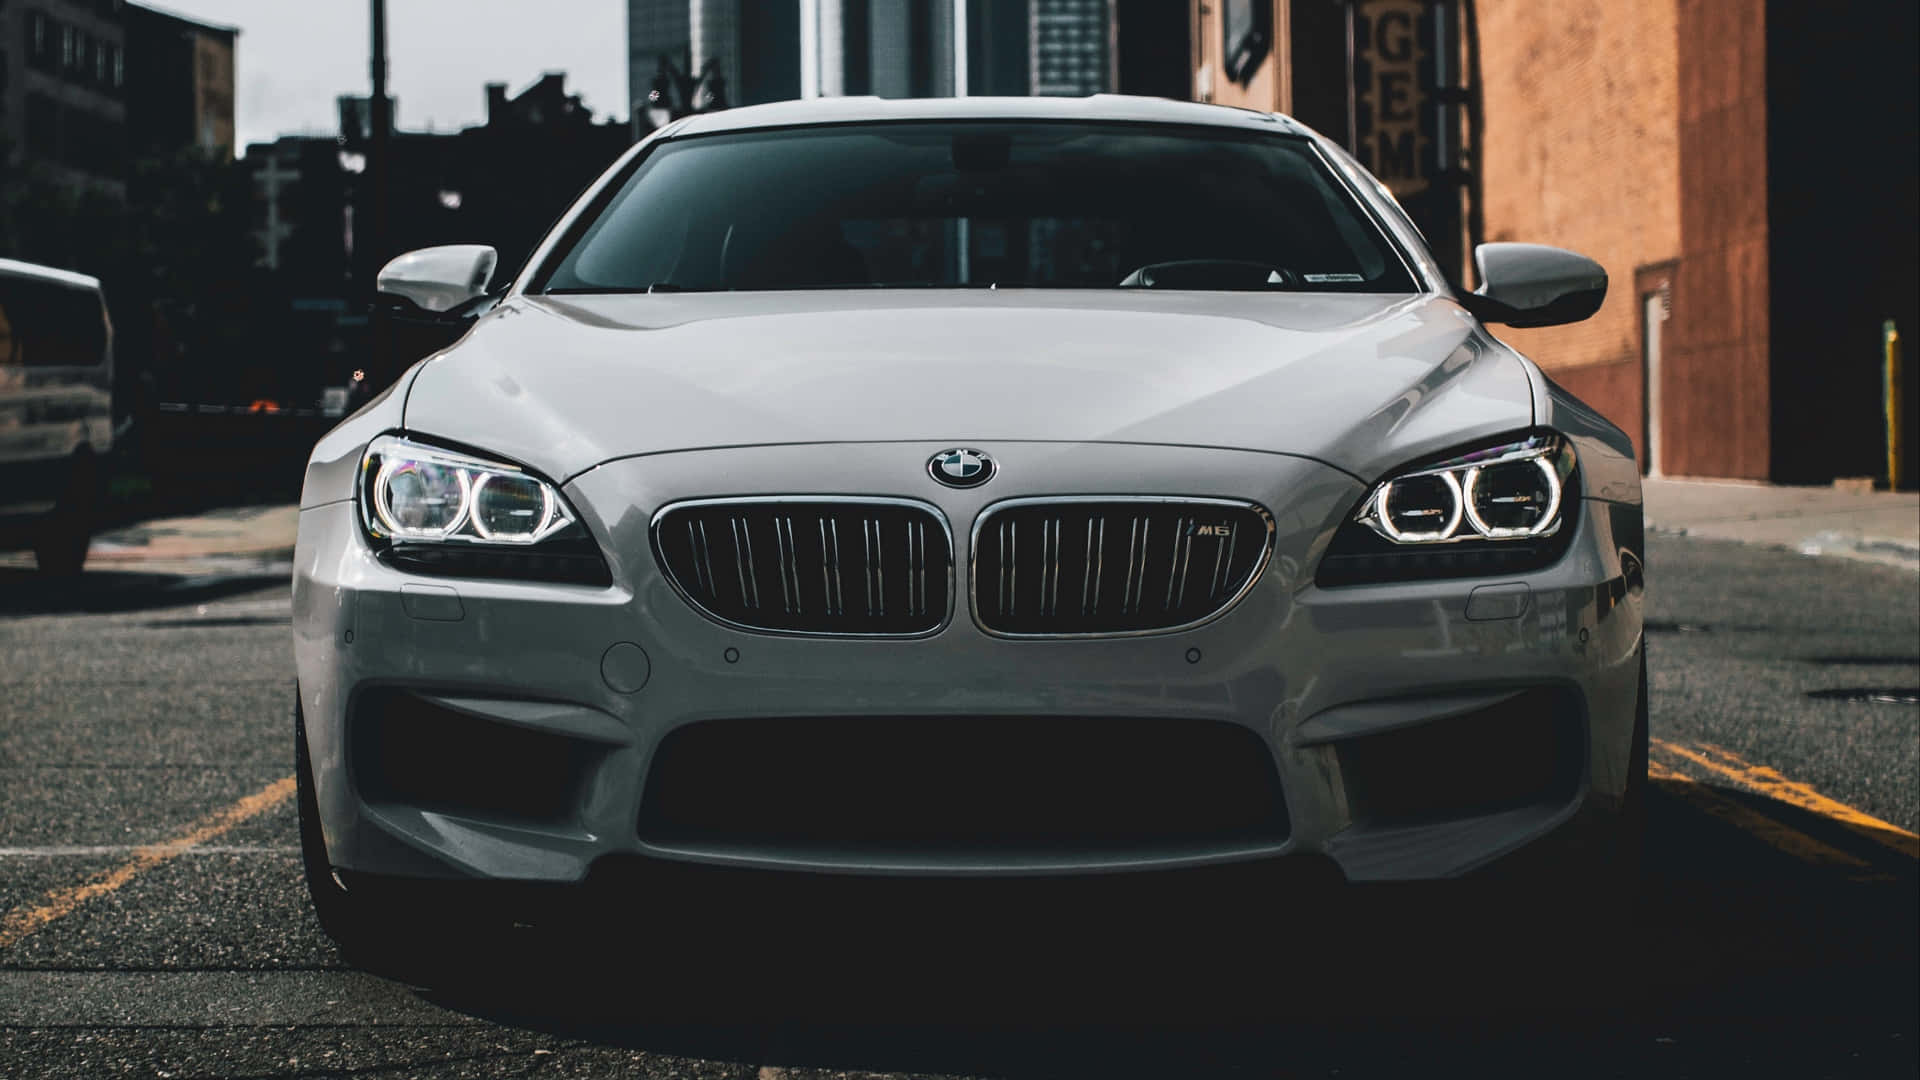 Caption: Sleek BMW M6 in Motion Wallpaper